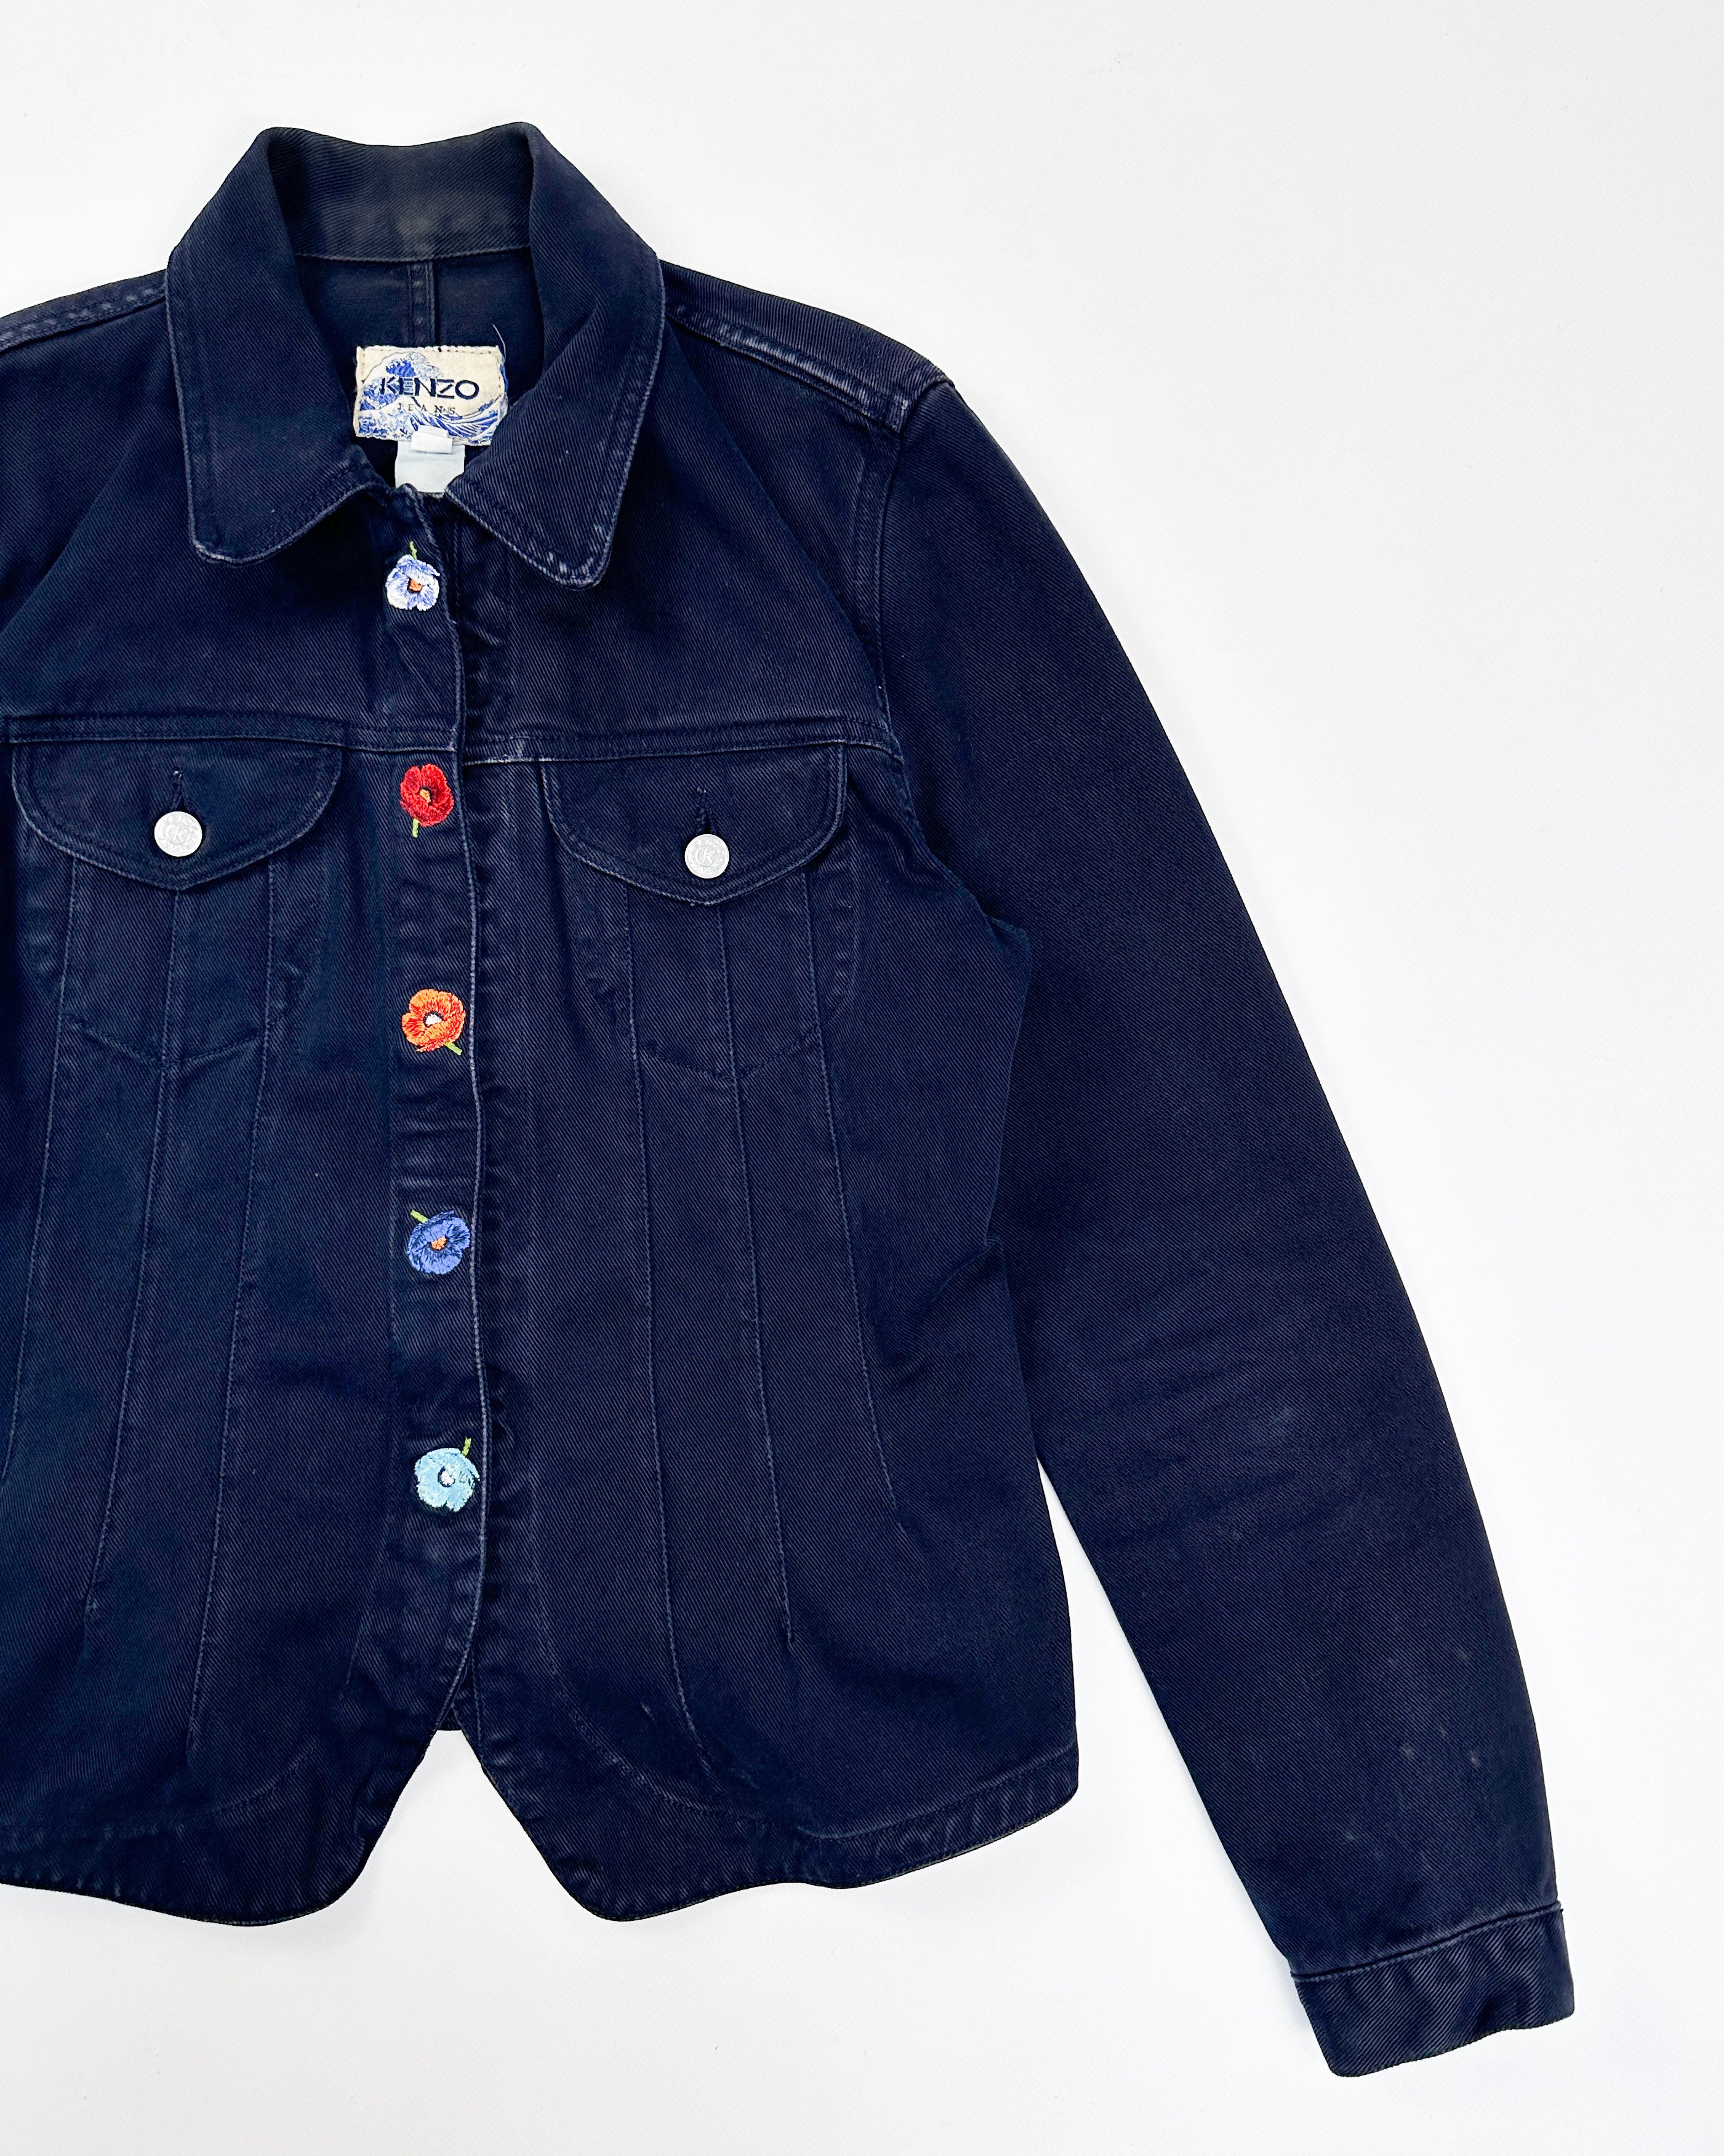 Kenzo Jeans Flowers Denim Jacket 1990's – Vintage TTS